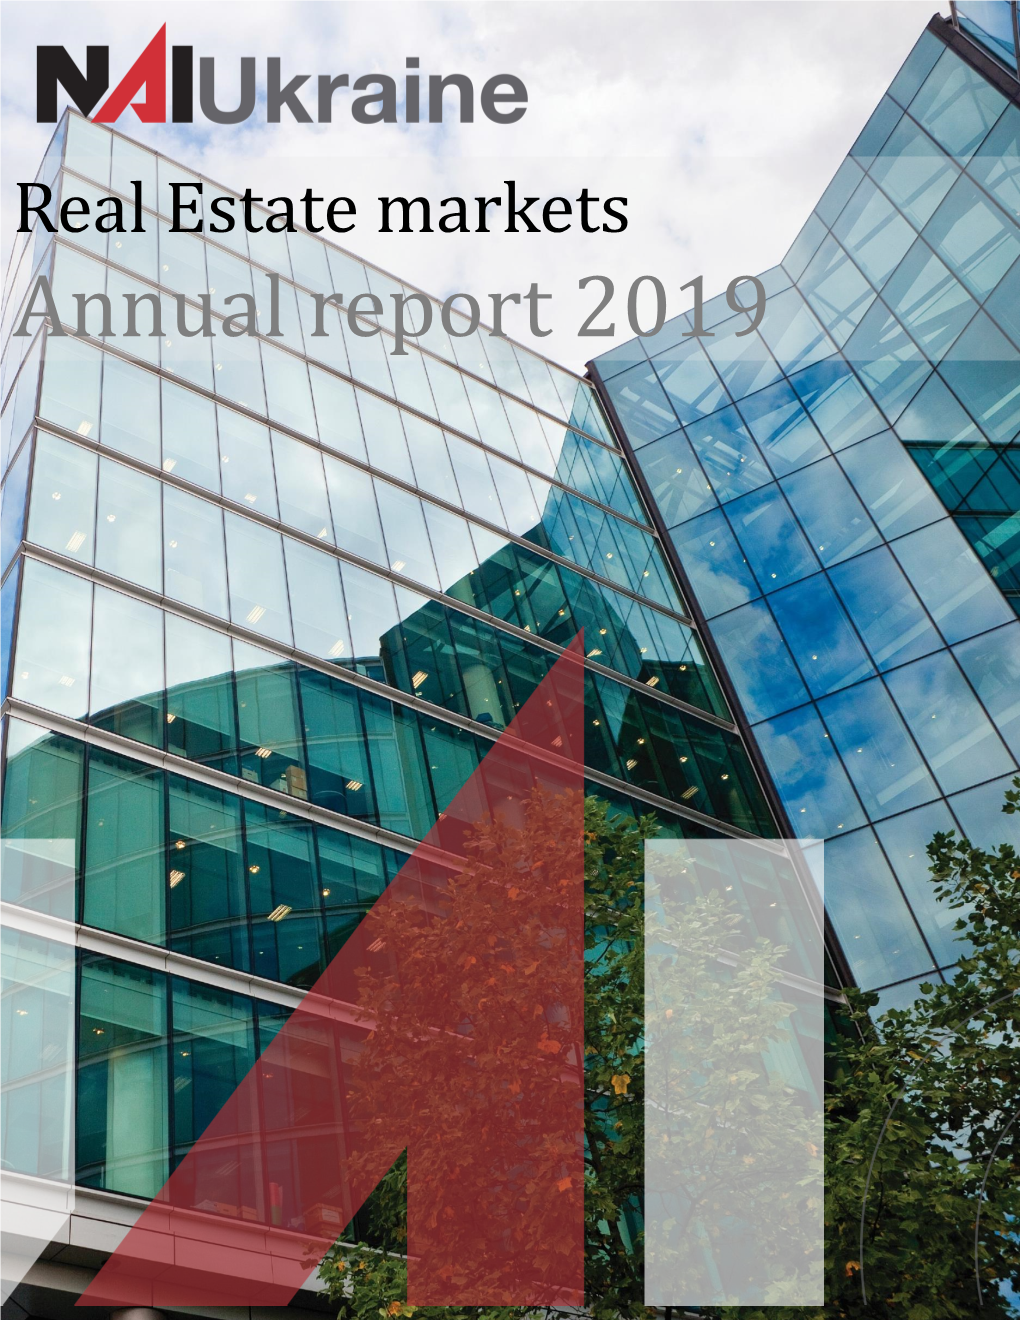 Annual Report 2019 Annual Report 2019 Content